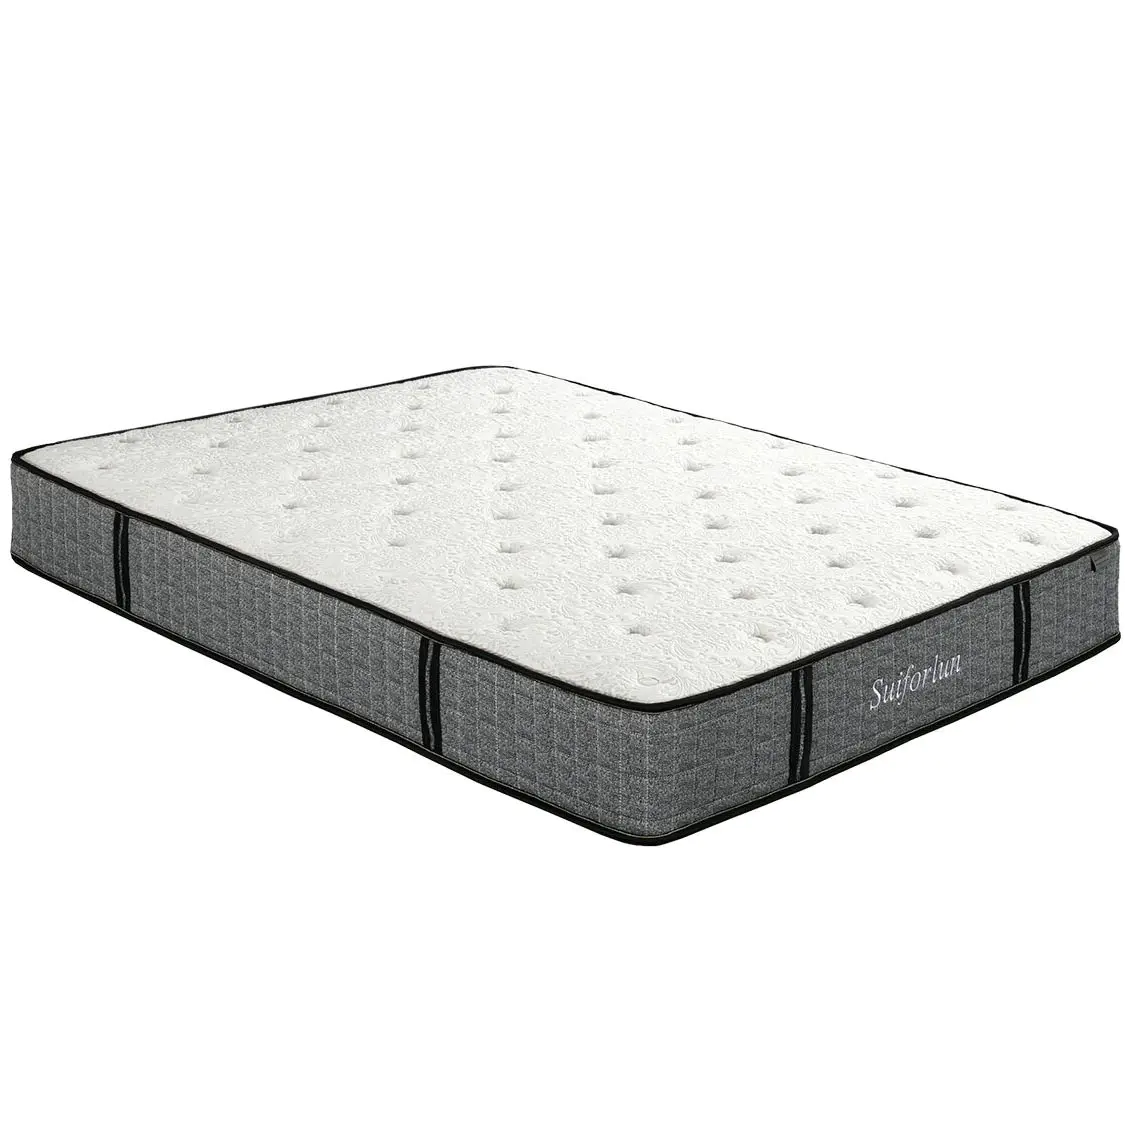 Suiforlun mattress coils innerspring best hybrid bed manufacturer for hotel